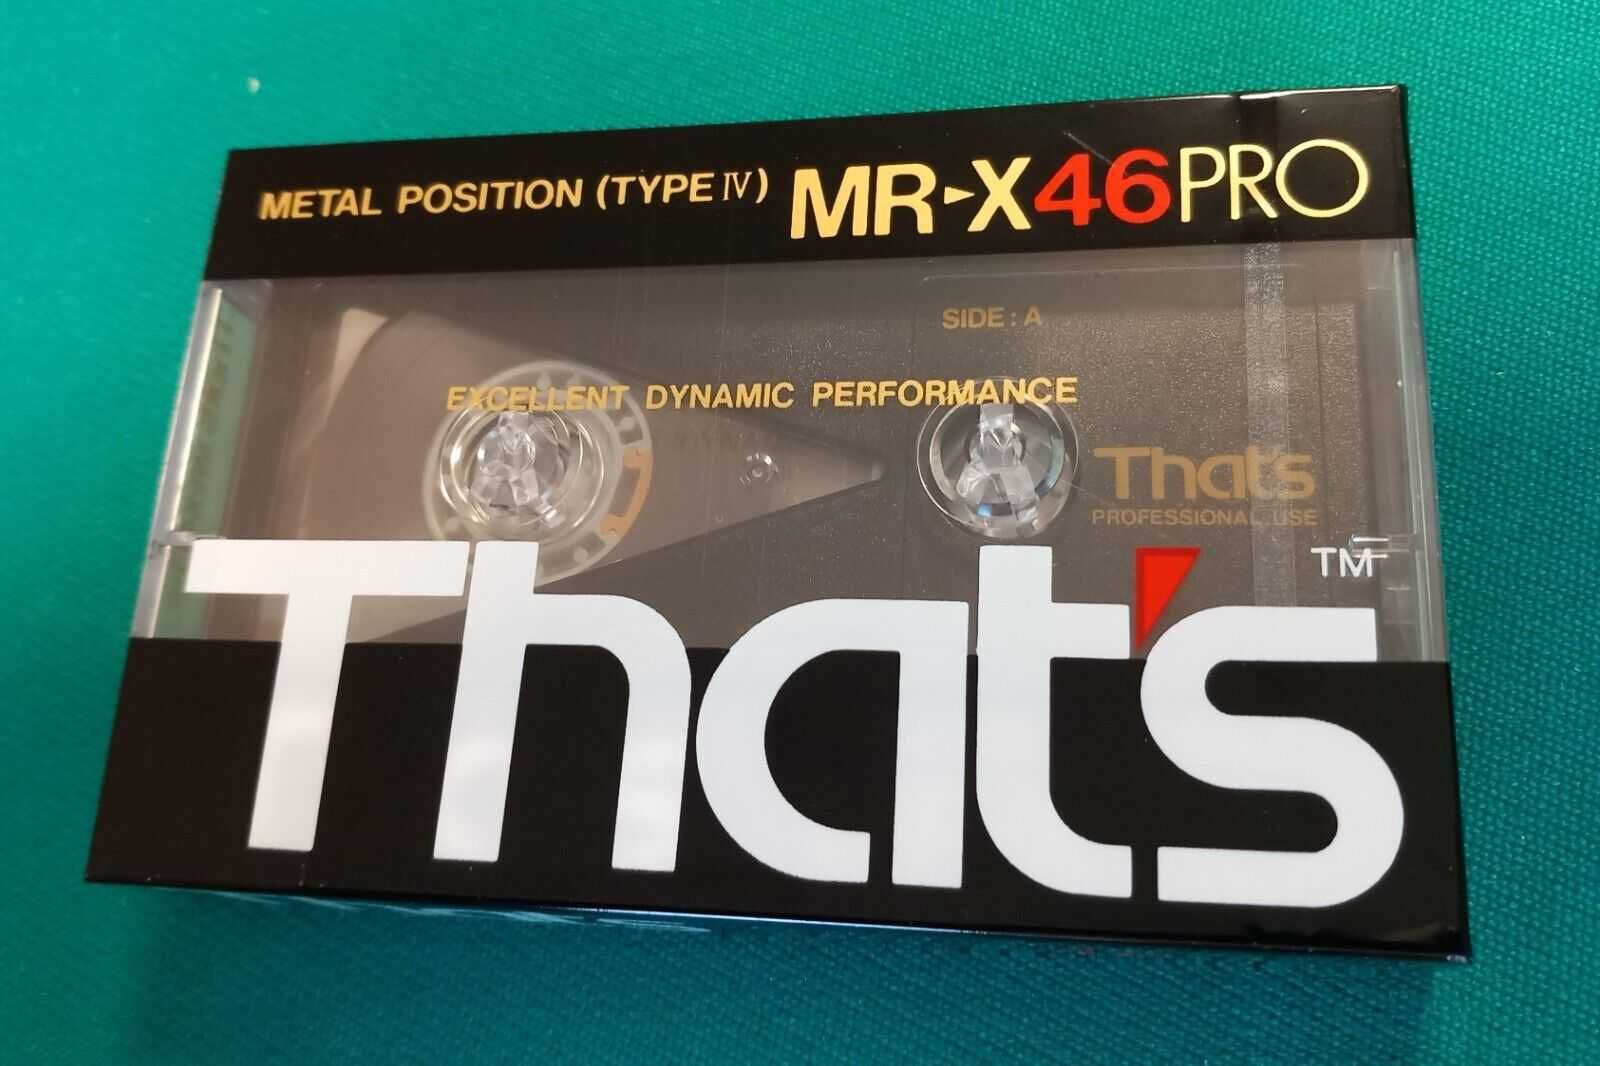 Thats MR-X46PRO аудио кассета Metal (Made in Japan) новая